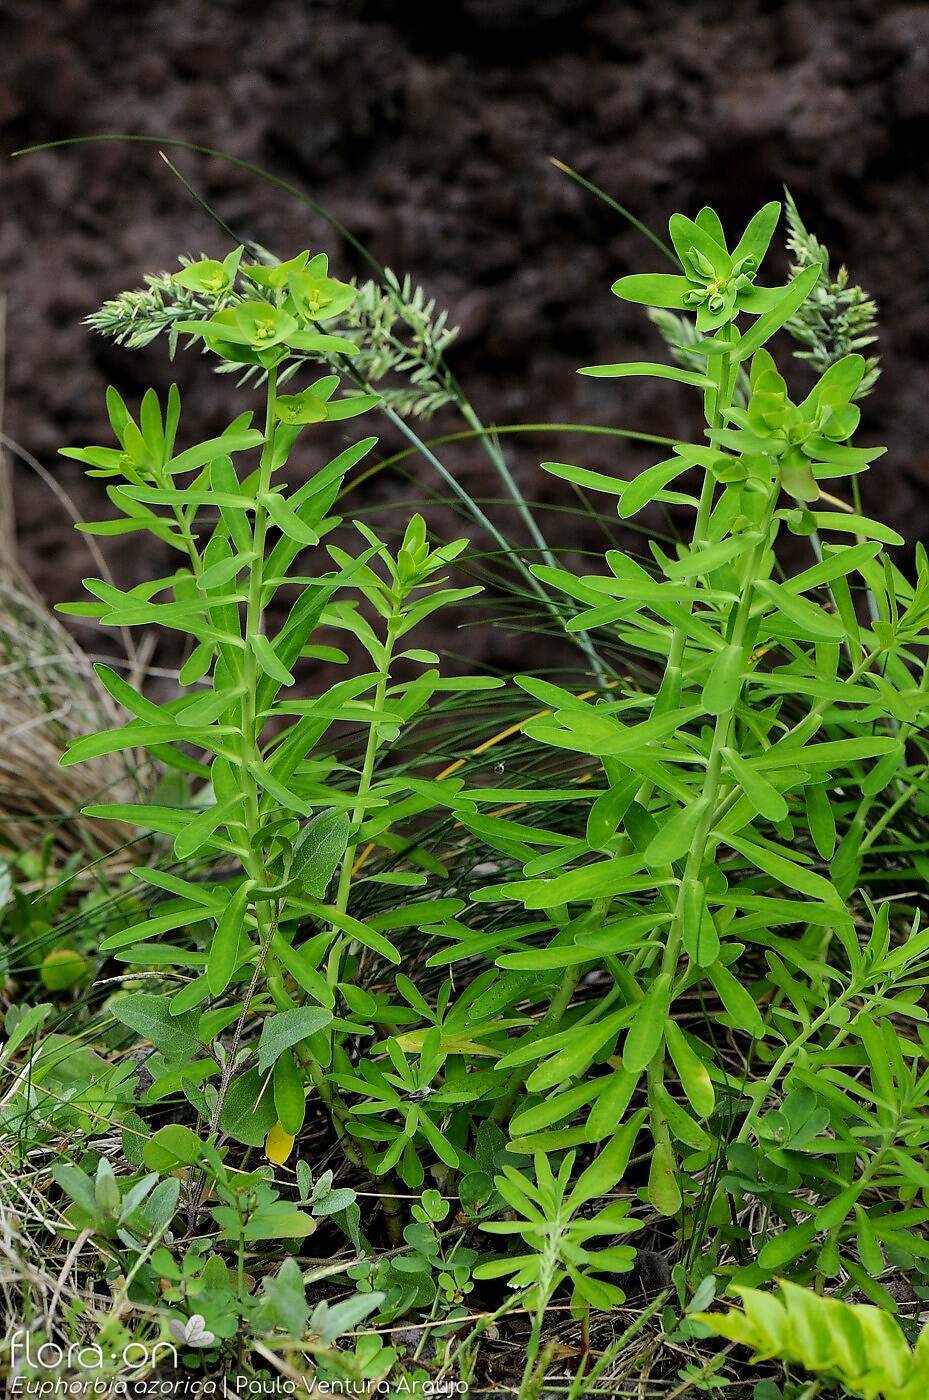 Euphorbia azorica -  | Paulo Ventura Araújo; CC BY-NC 4.0